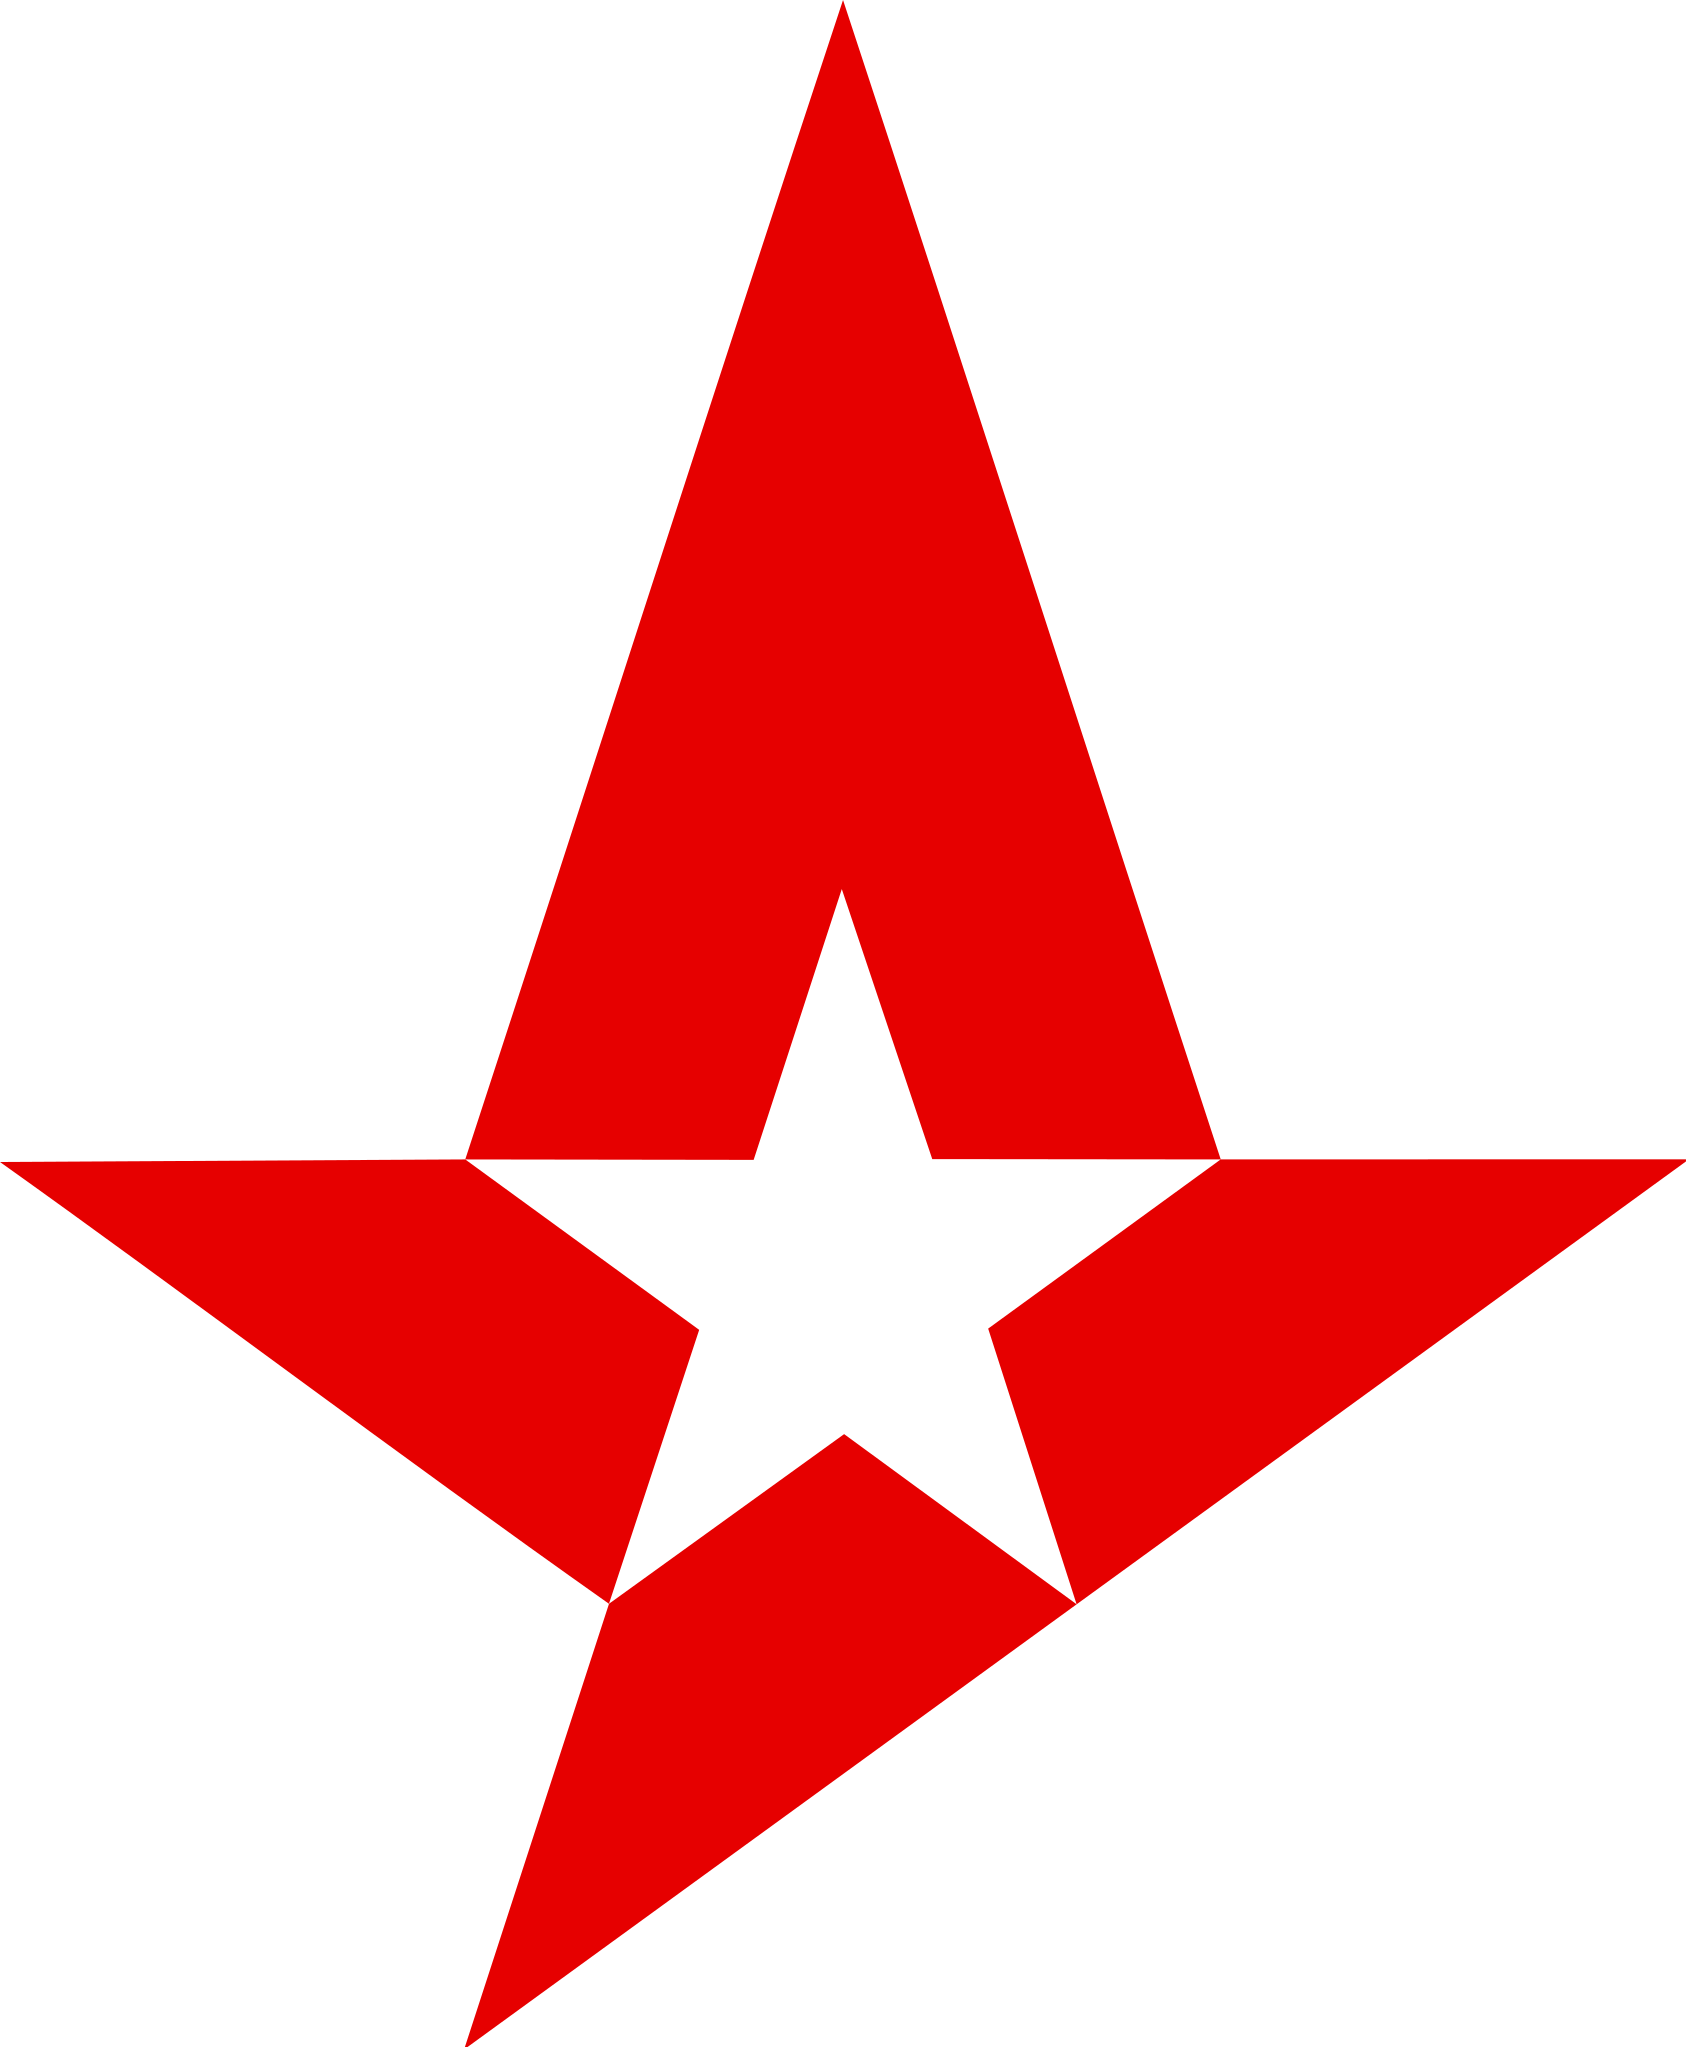 File:Astralis logo.svg - Wikimedia Commons